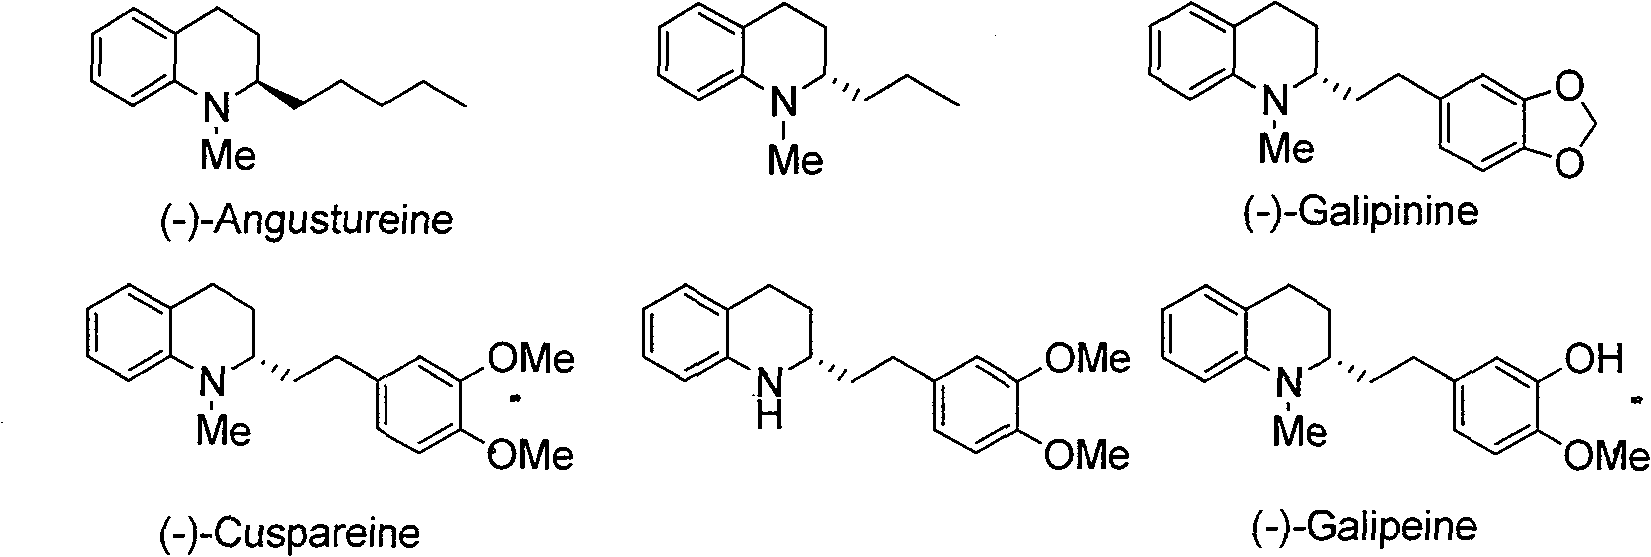 Method for synthesizing derivatives of chiral tetrahydroquinoline by catalyzing asymmetric hydrosilylation with iridium